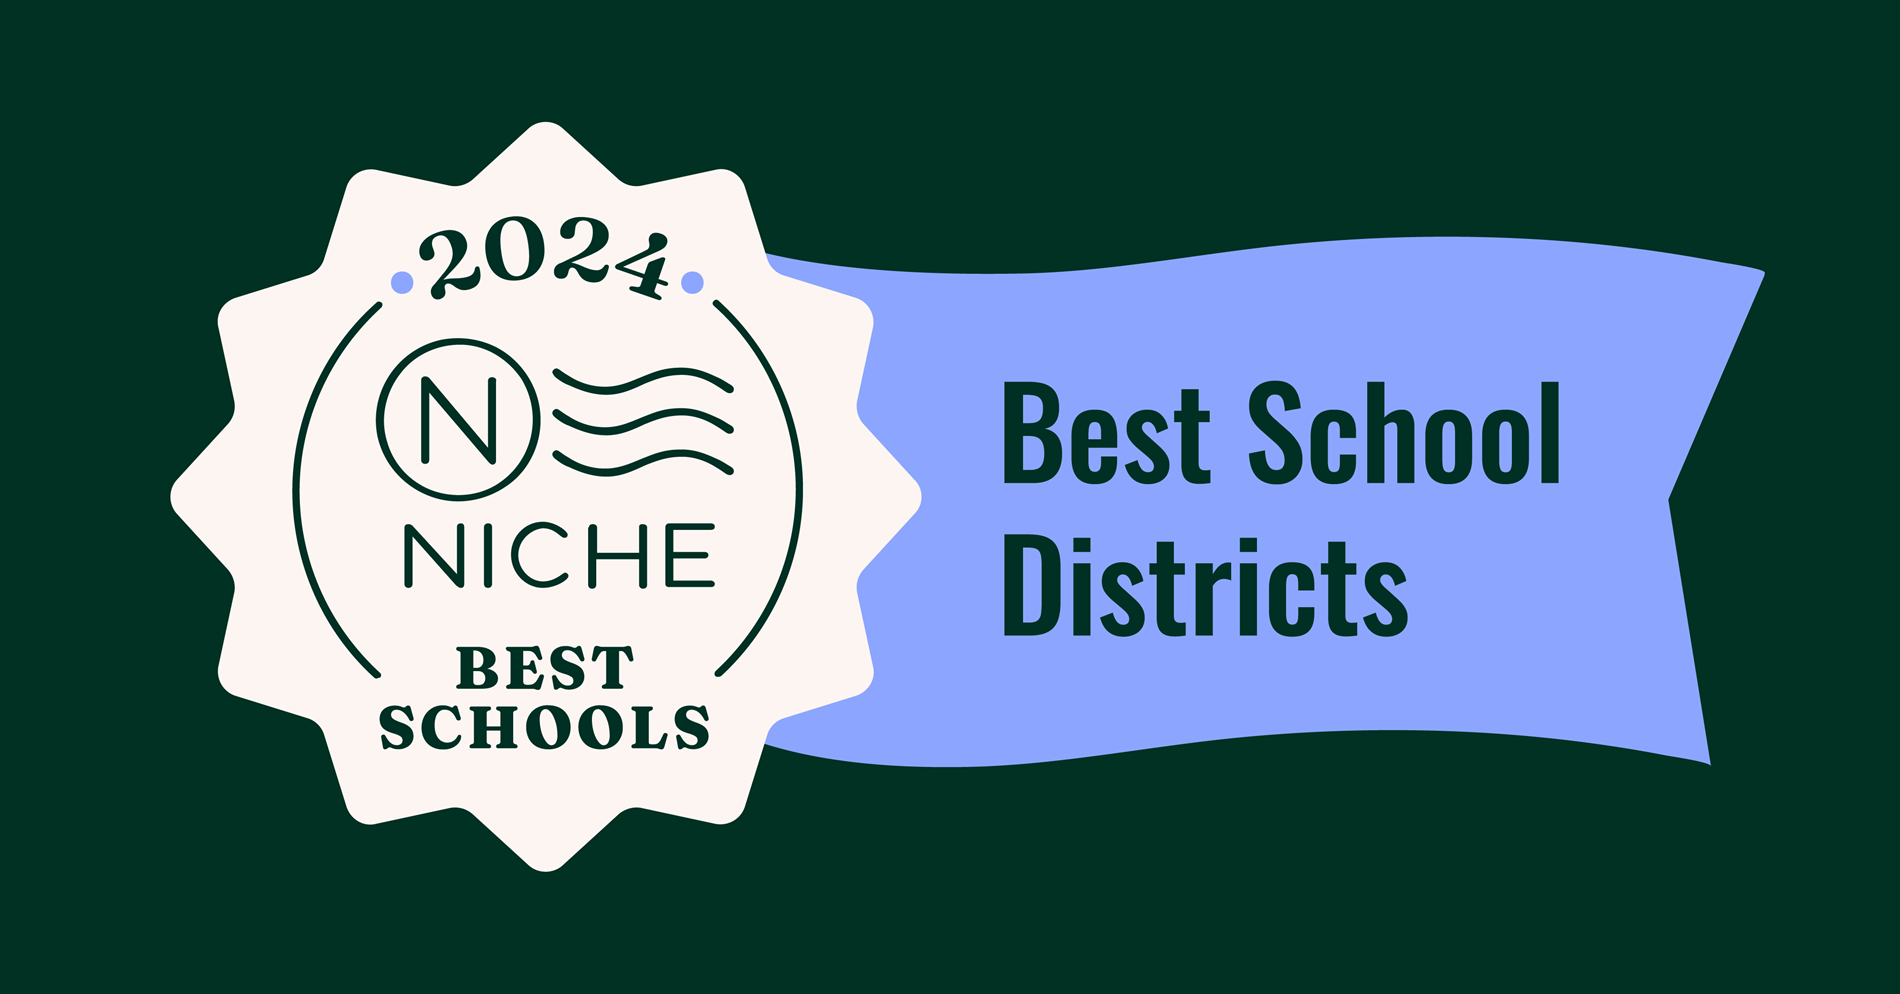 Best School District in the Montgomery Area